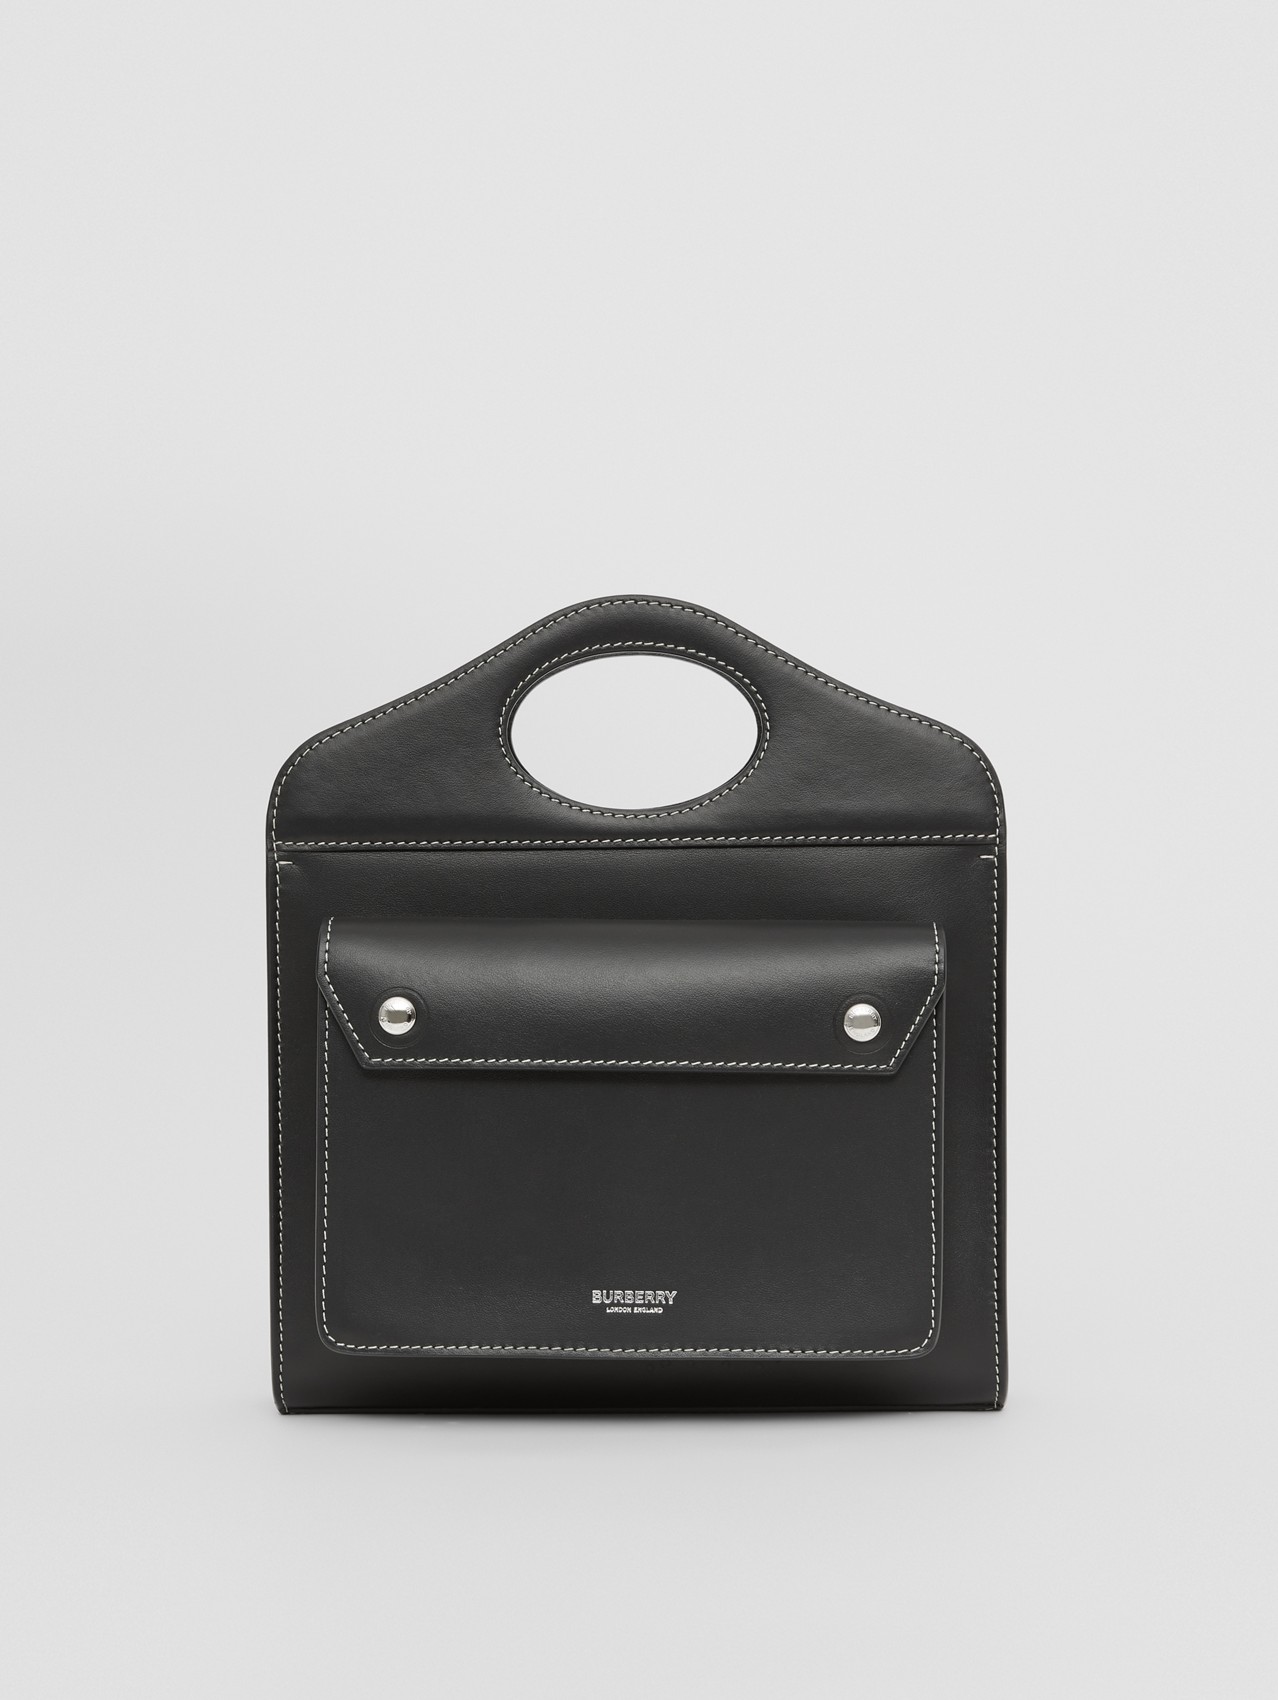 Mini Topstitched Leather Pocket Bag in Black